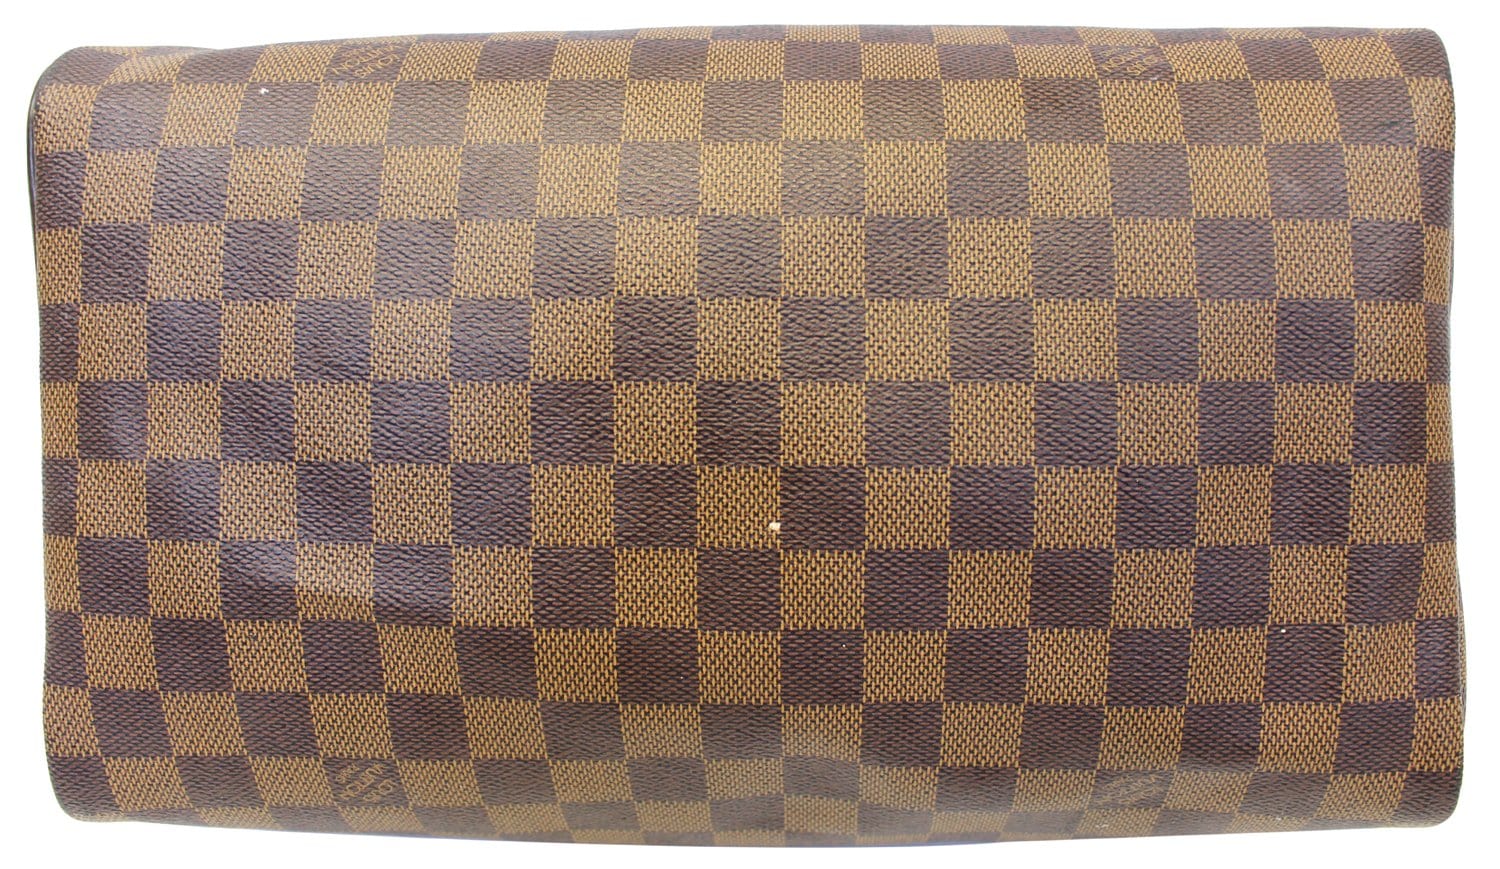 Louis Vuitton Speedy Bandoulière 30 Damier Ebeene City Bag Brown